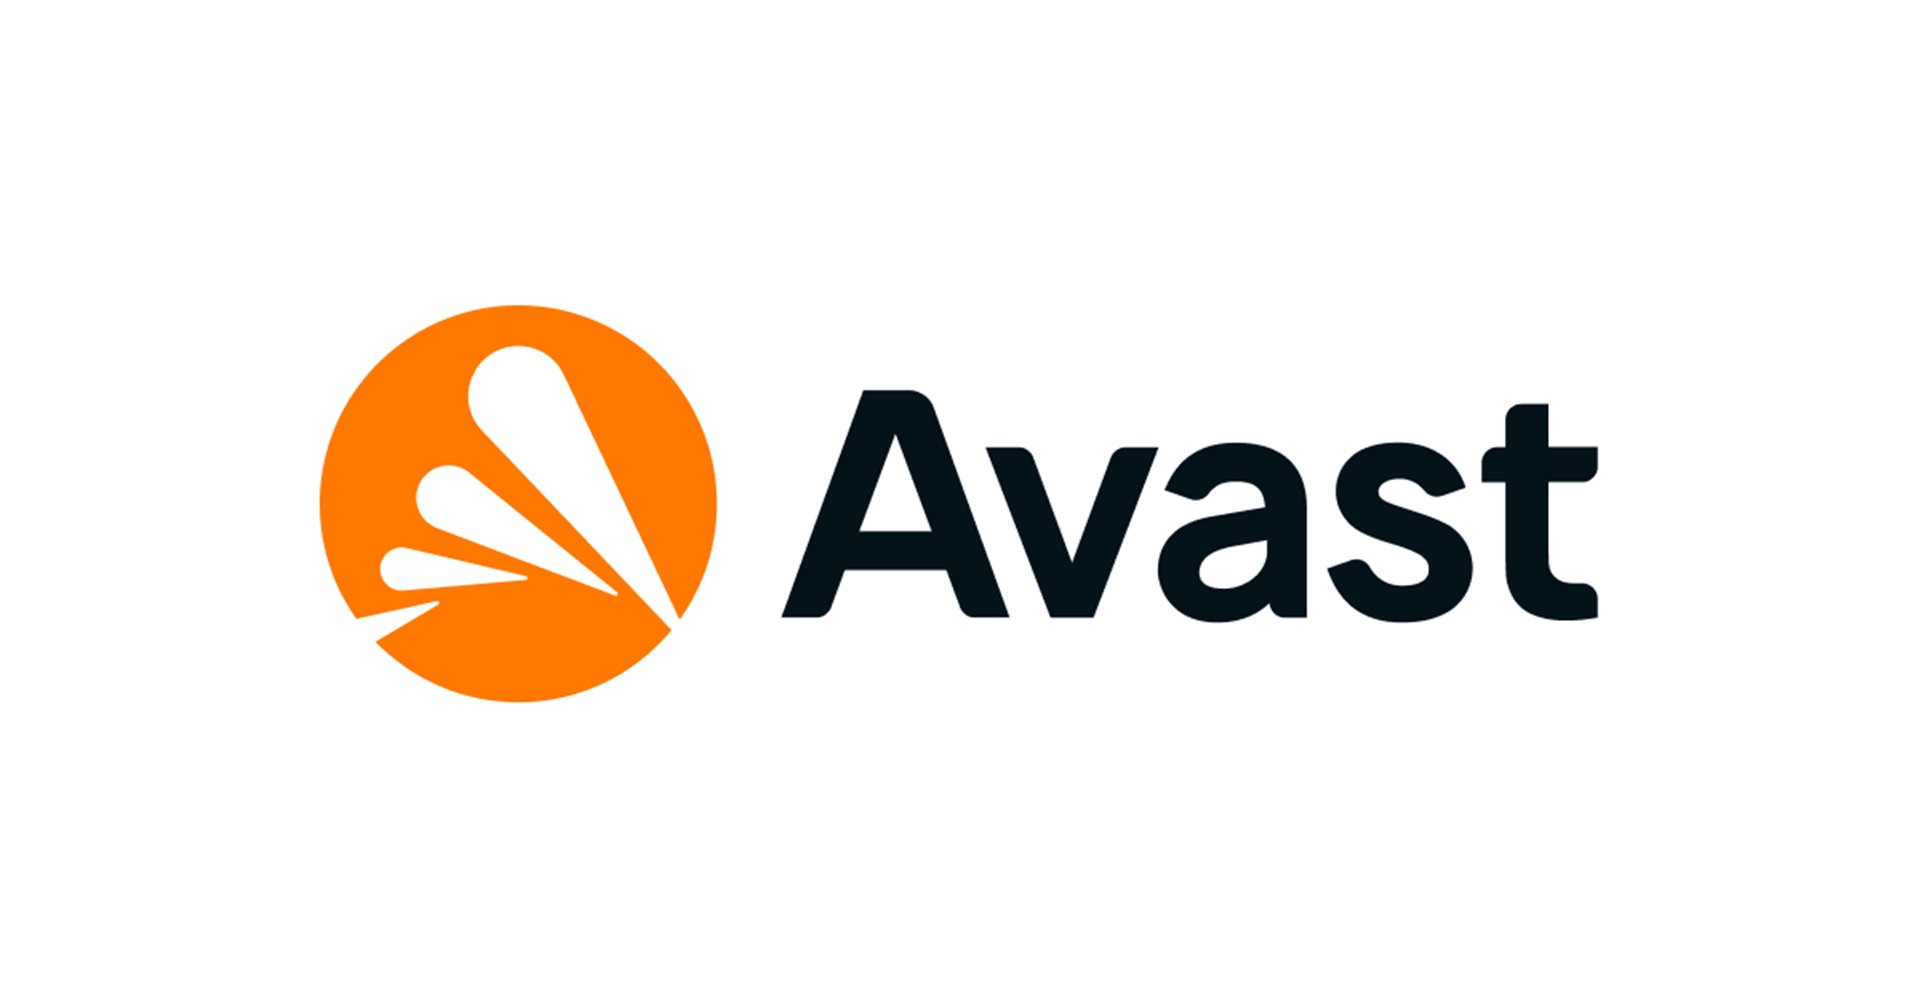 Avast Premium Business Security (1 year) 500+